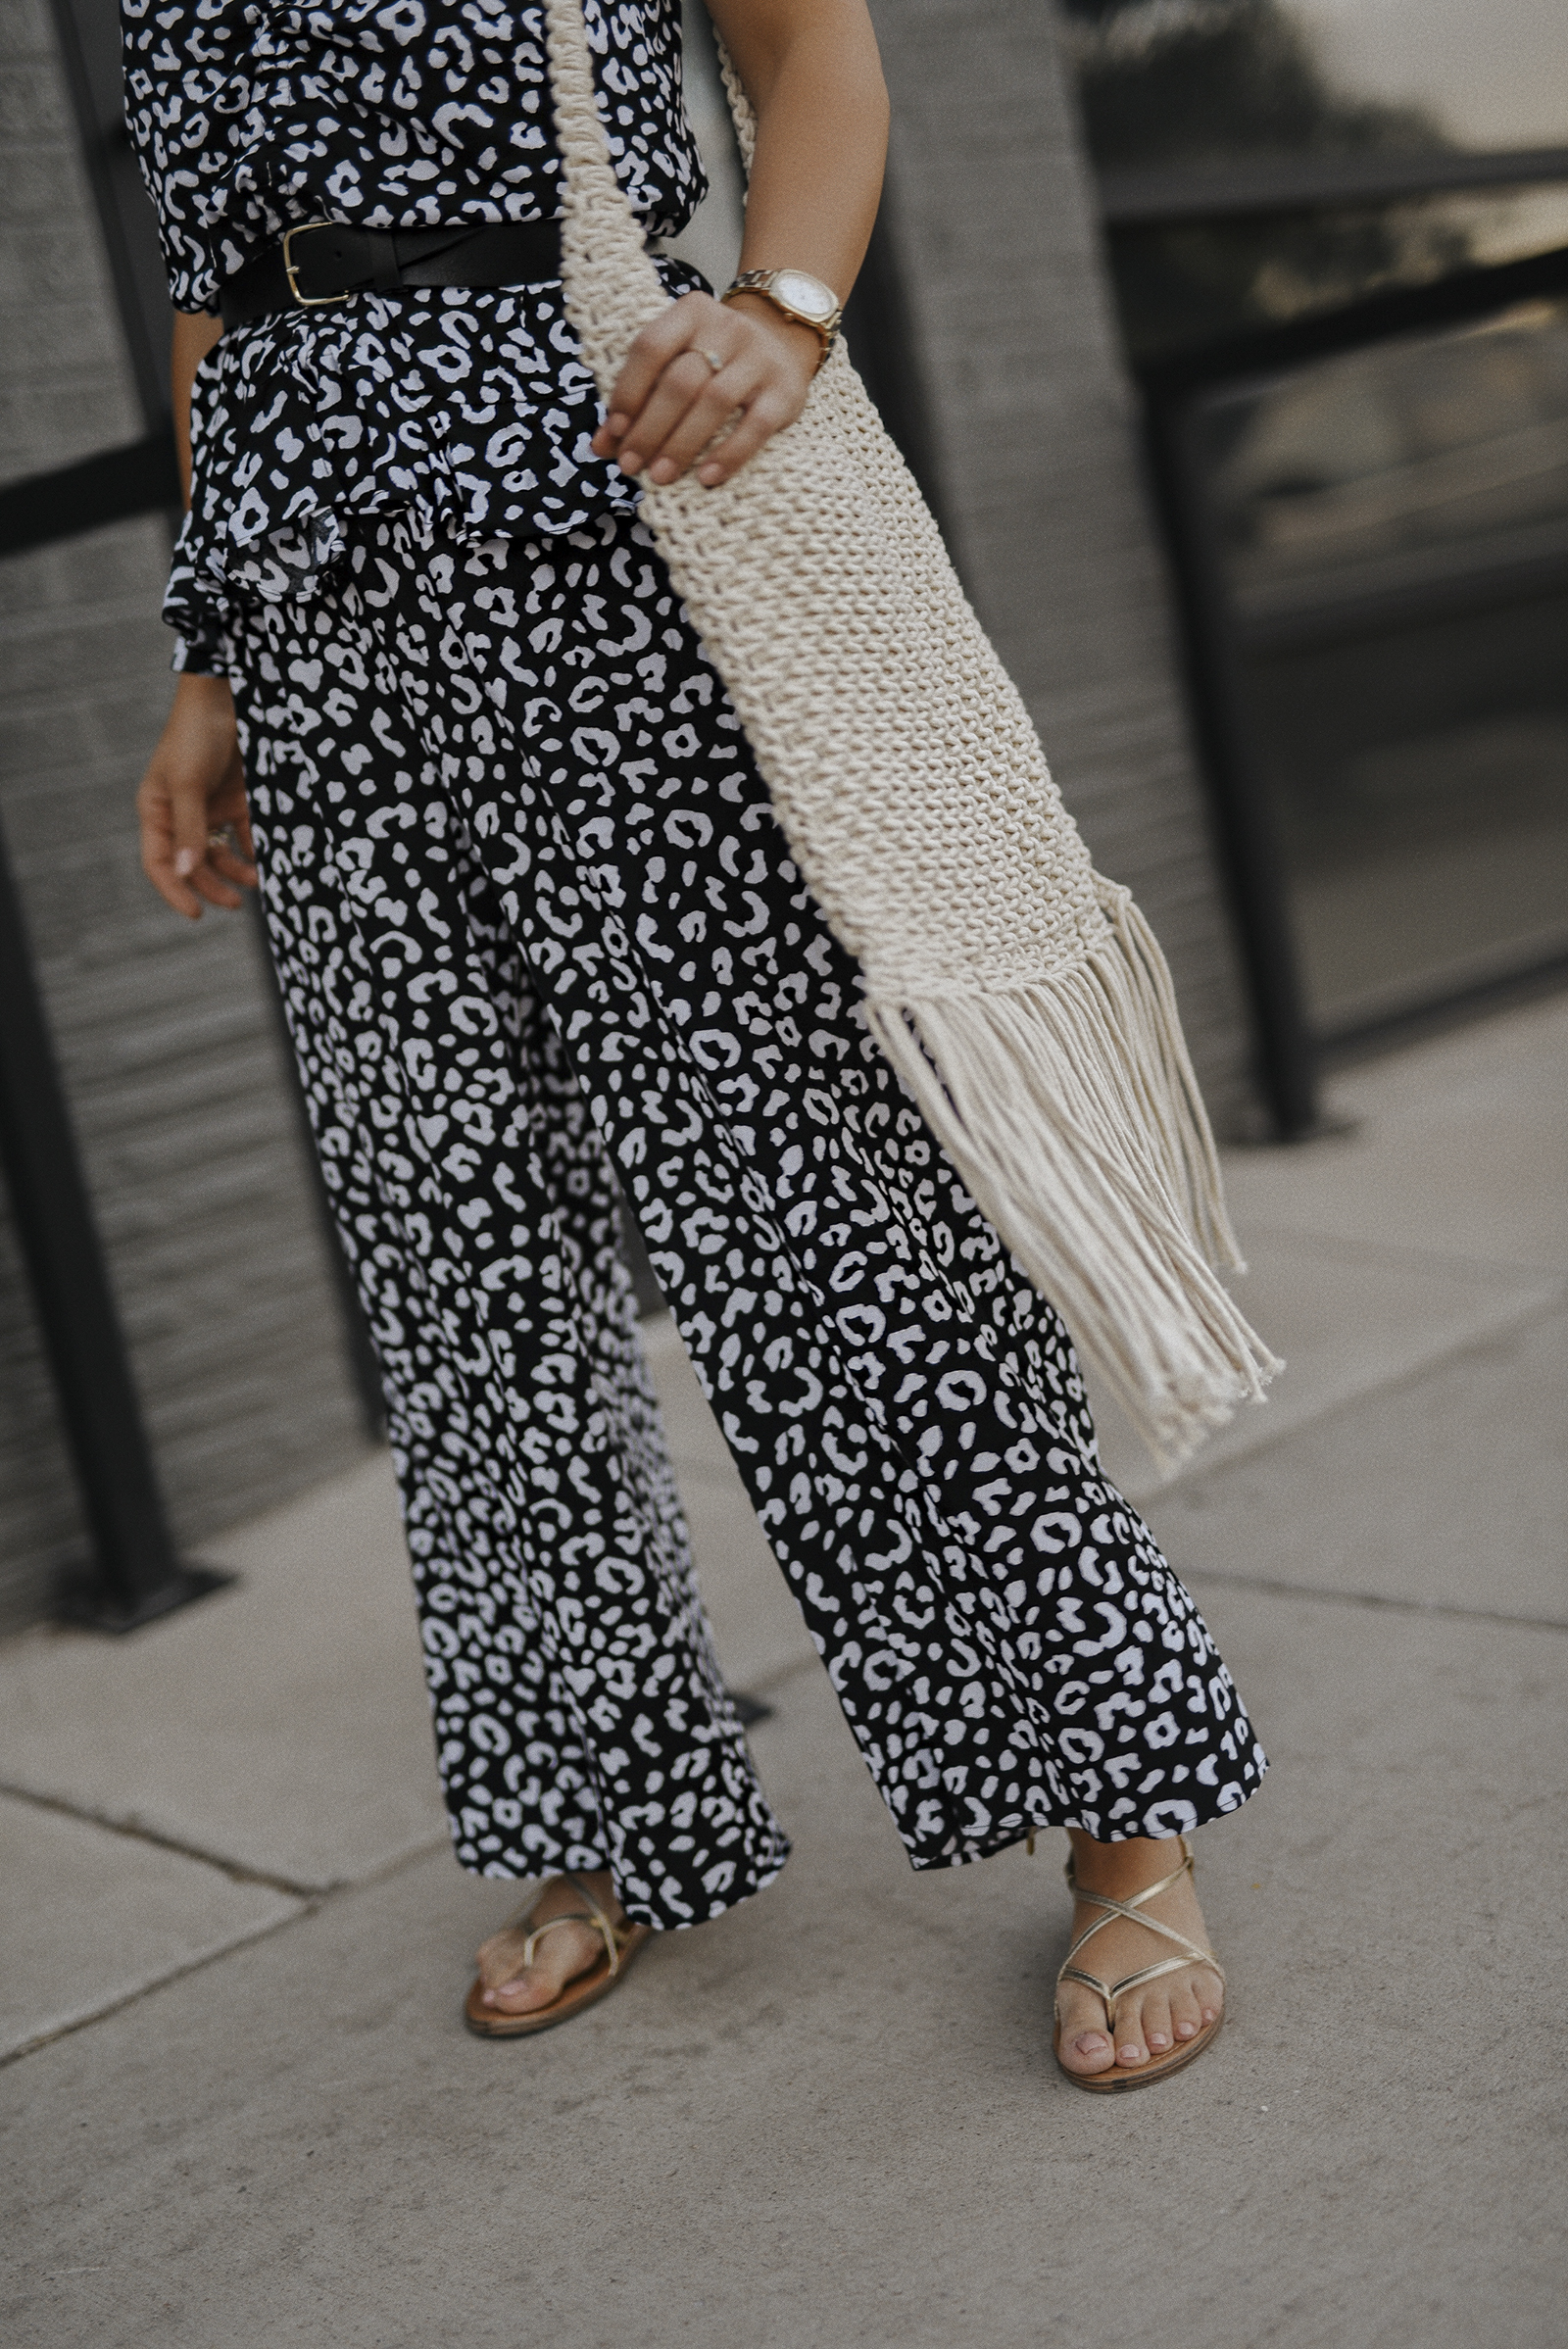 Carolina Hellal of Chic Talk wearing a Scoop printed top, wide leg pants, lace up sandals and knit mochila via Walmart. 